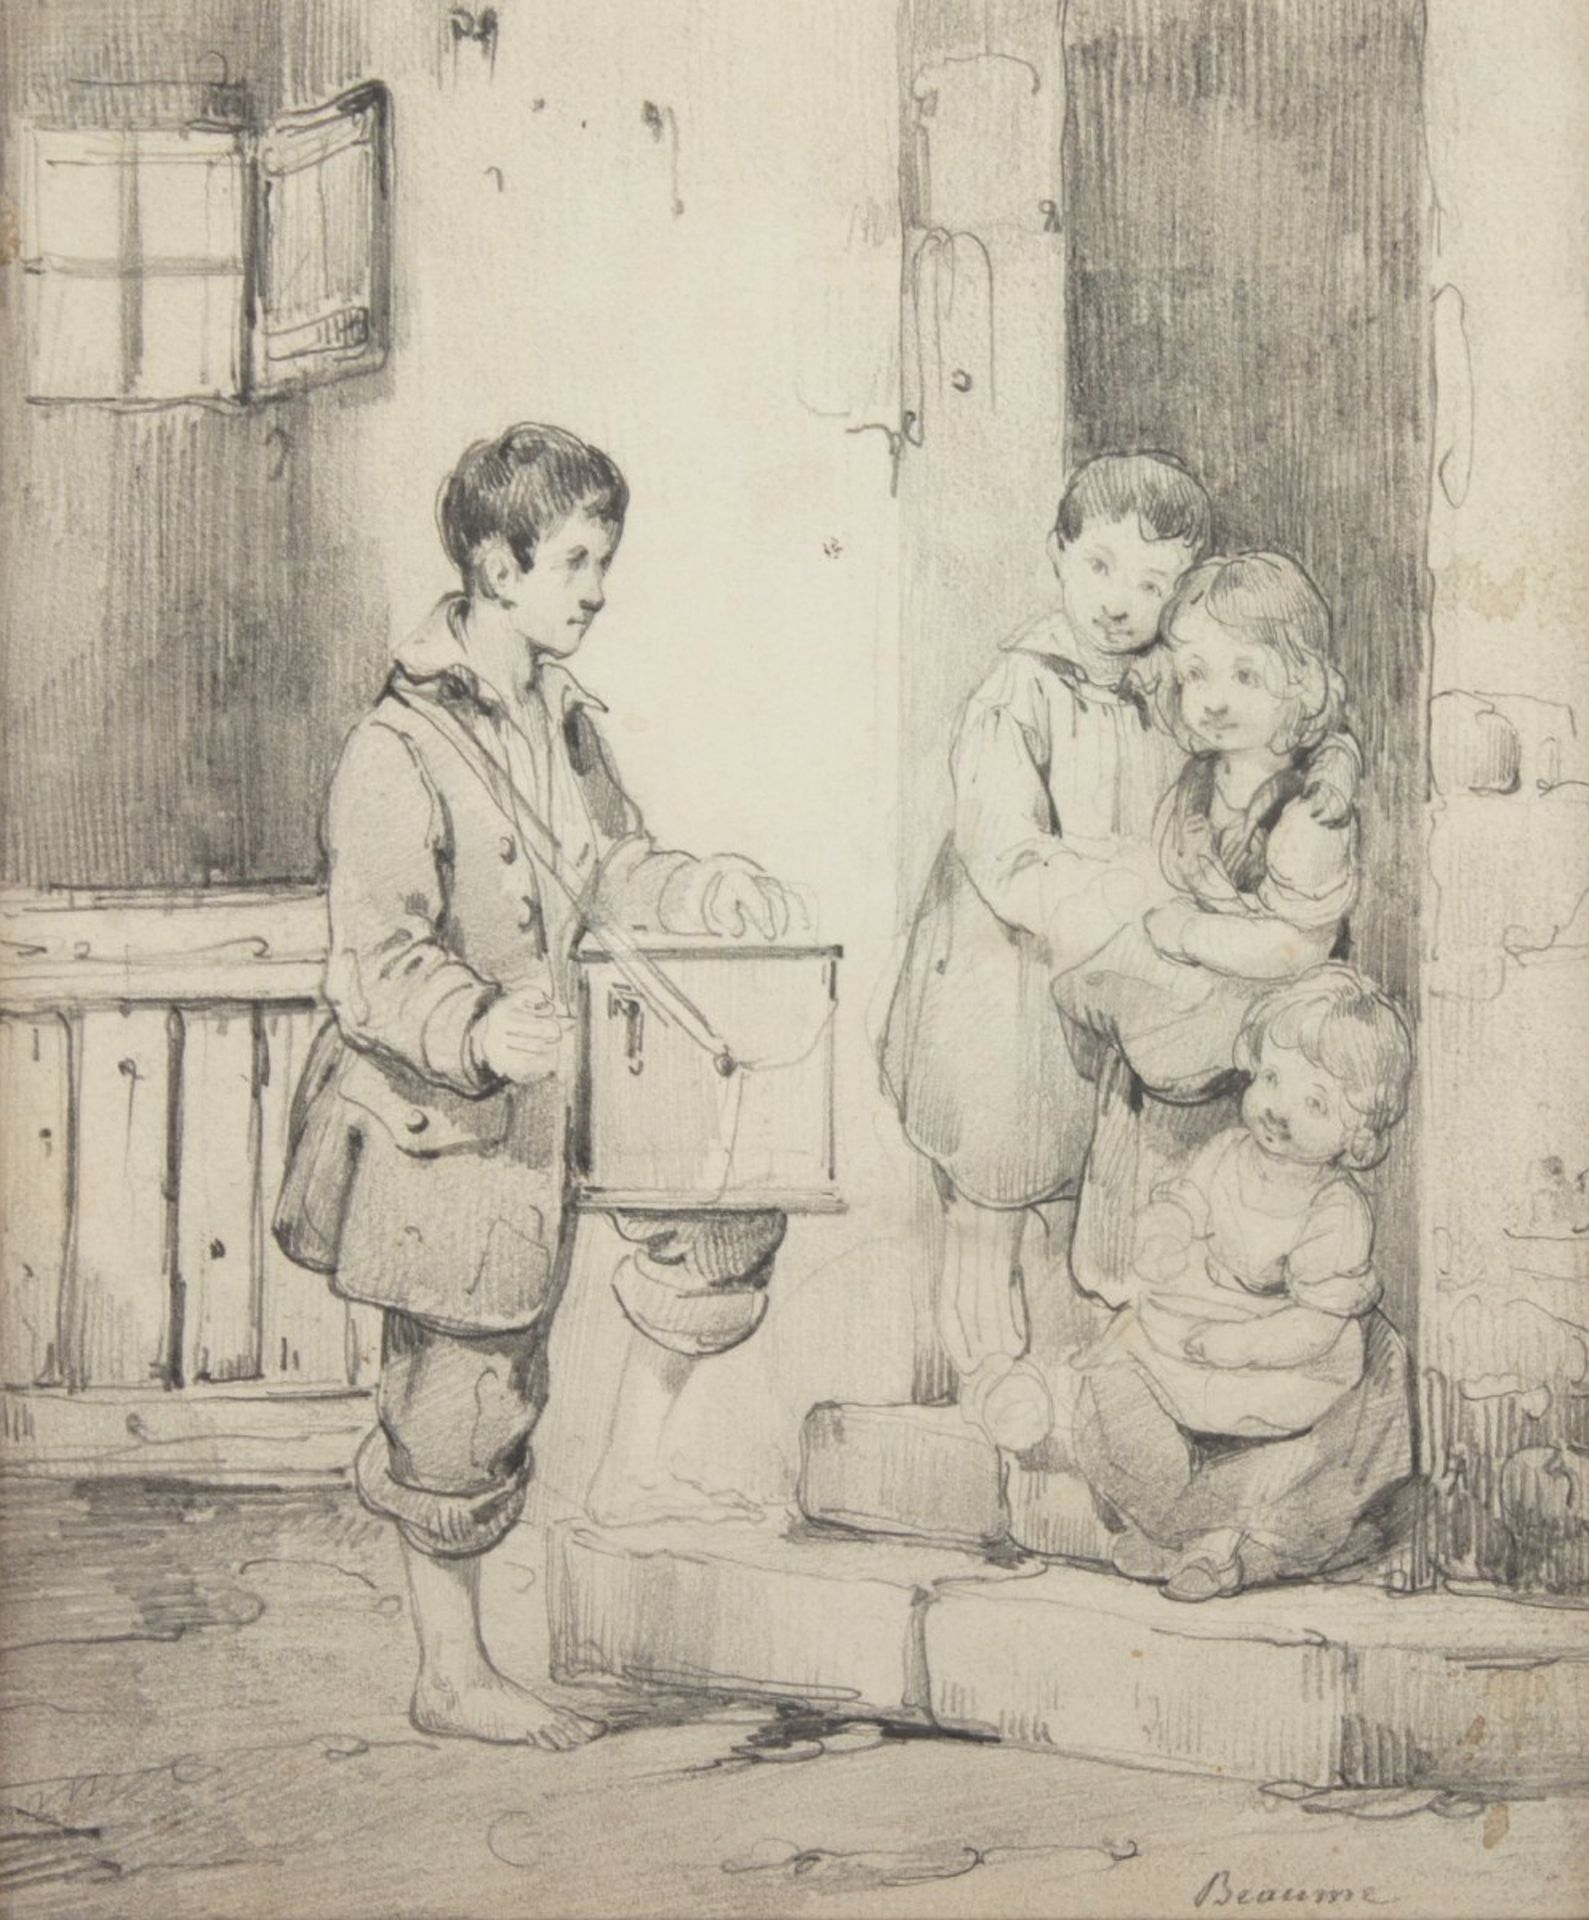 BEAUME, Joseph (1796-1885), "Besuch des Spielmanns", Bleistift/Papier, 18,5 x 16 (